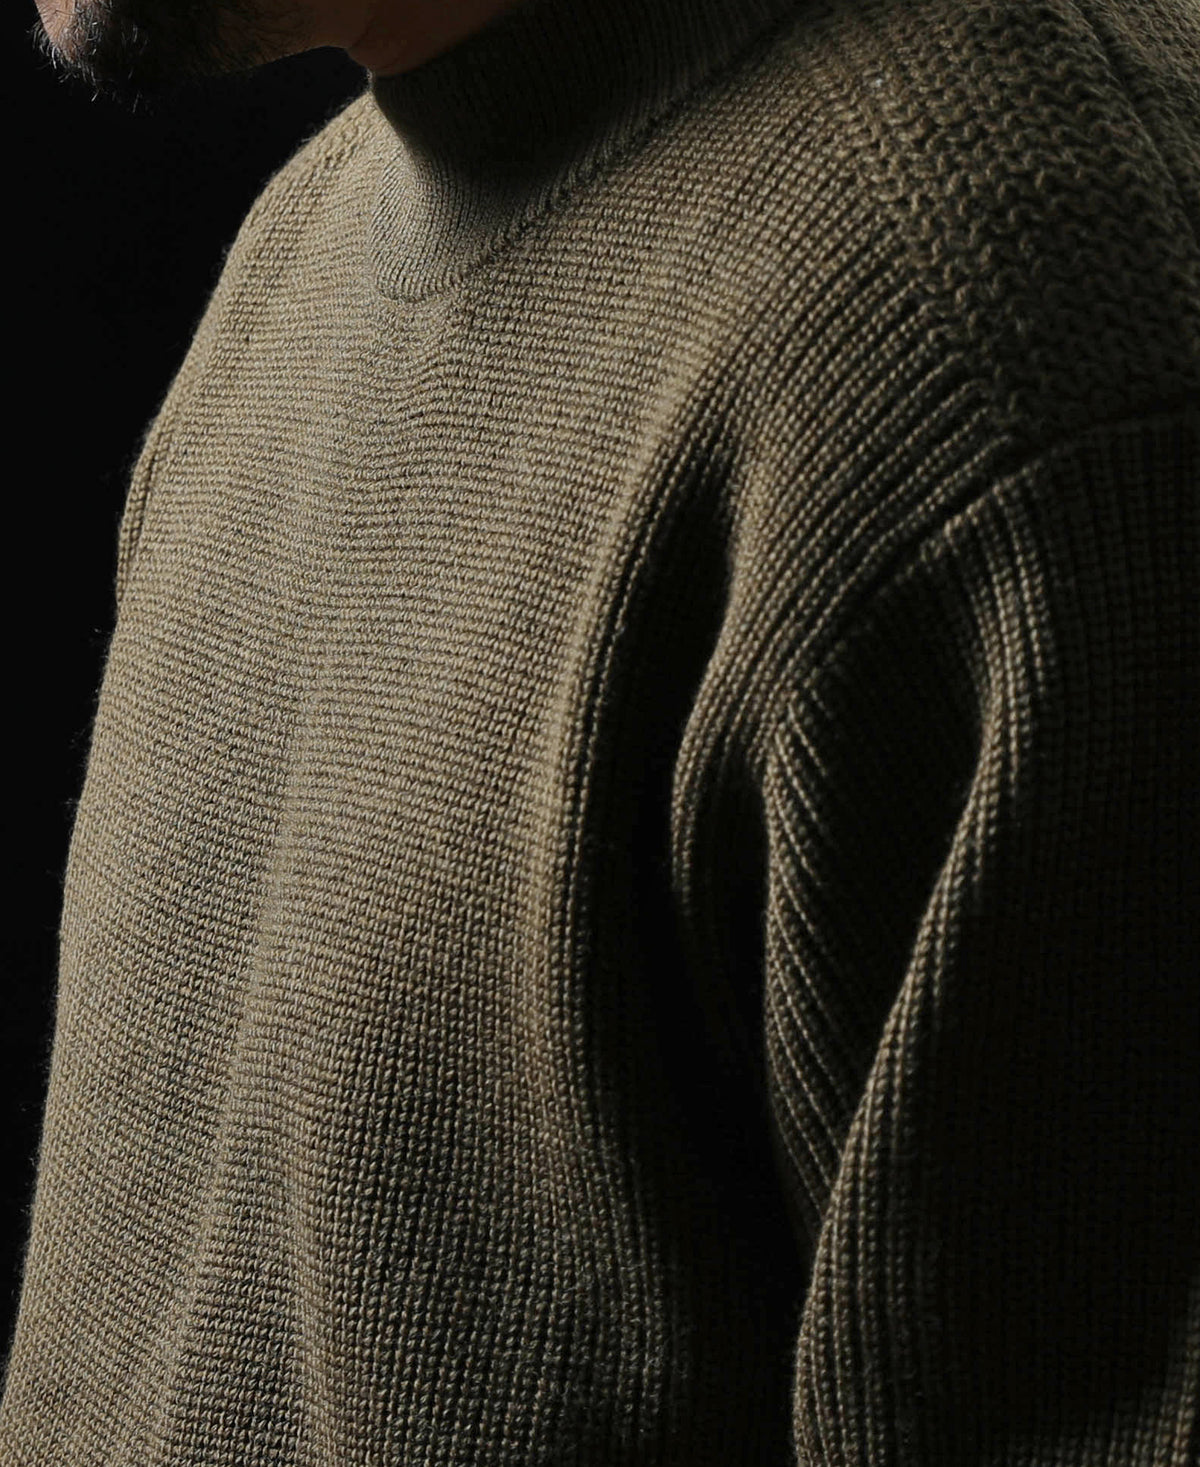 Pre-War Model USN Woolen Sweater - Olive